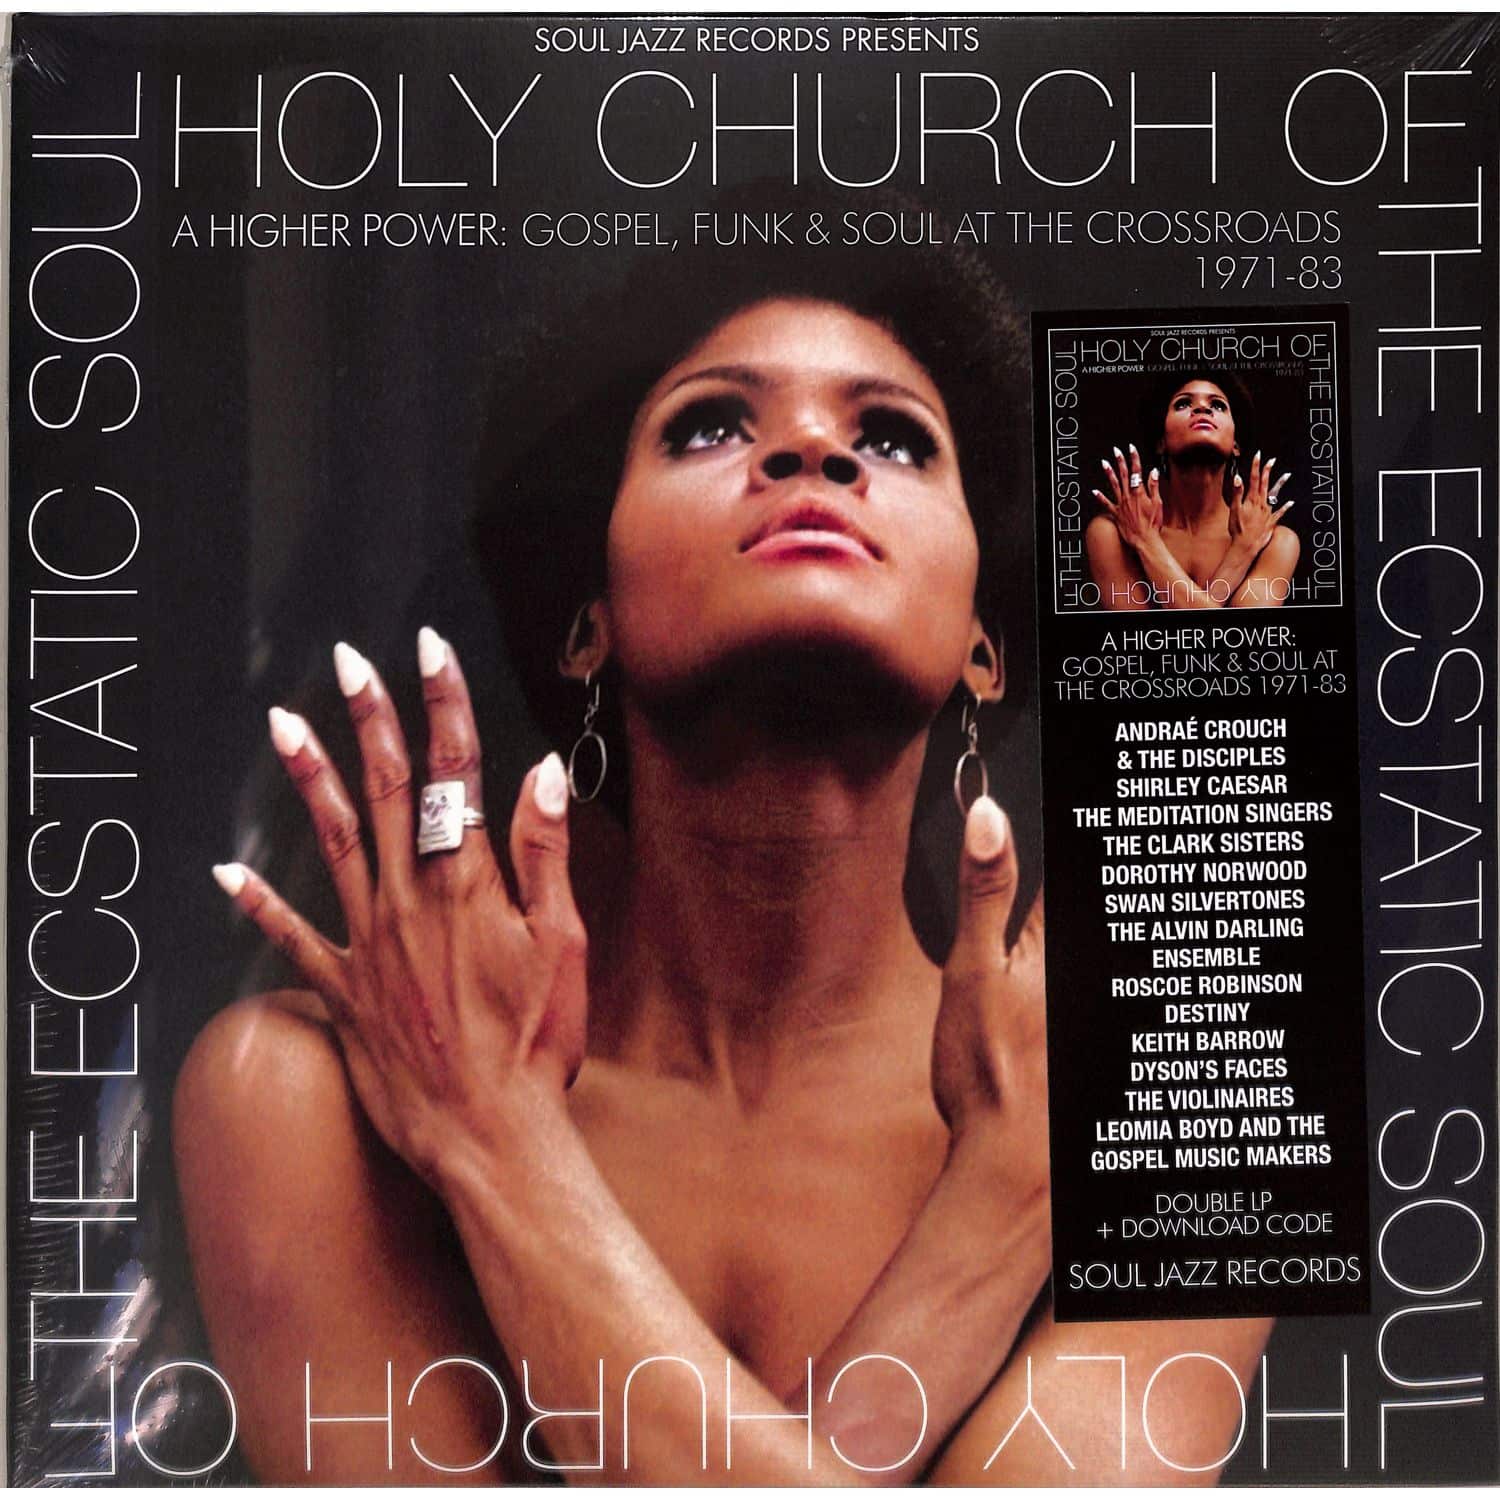 Various Artists - HOLY CHURCH: GOSPEL, FUNK & SOUL 1971-83 